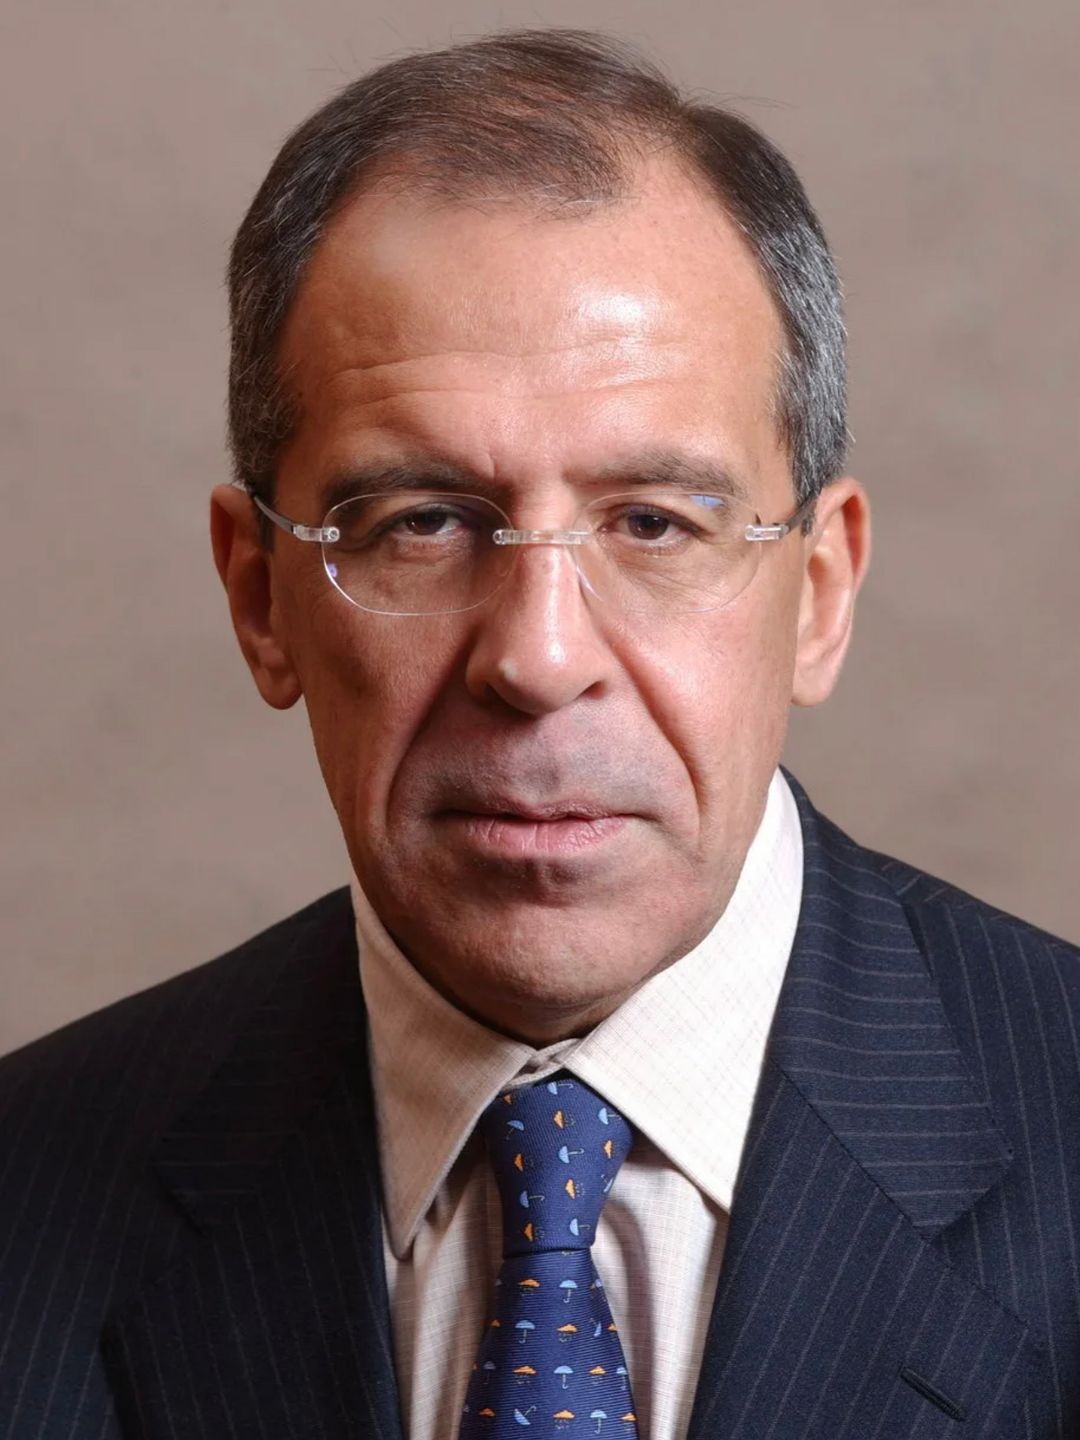 Sergey Lavrov ethnicity